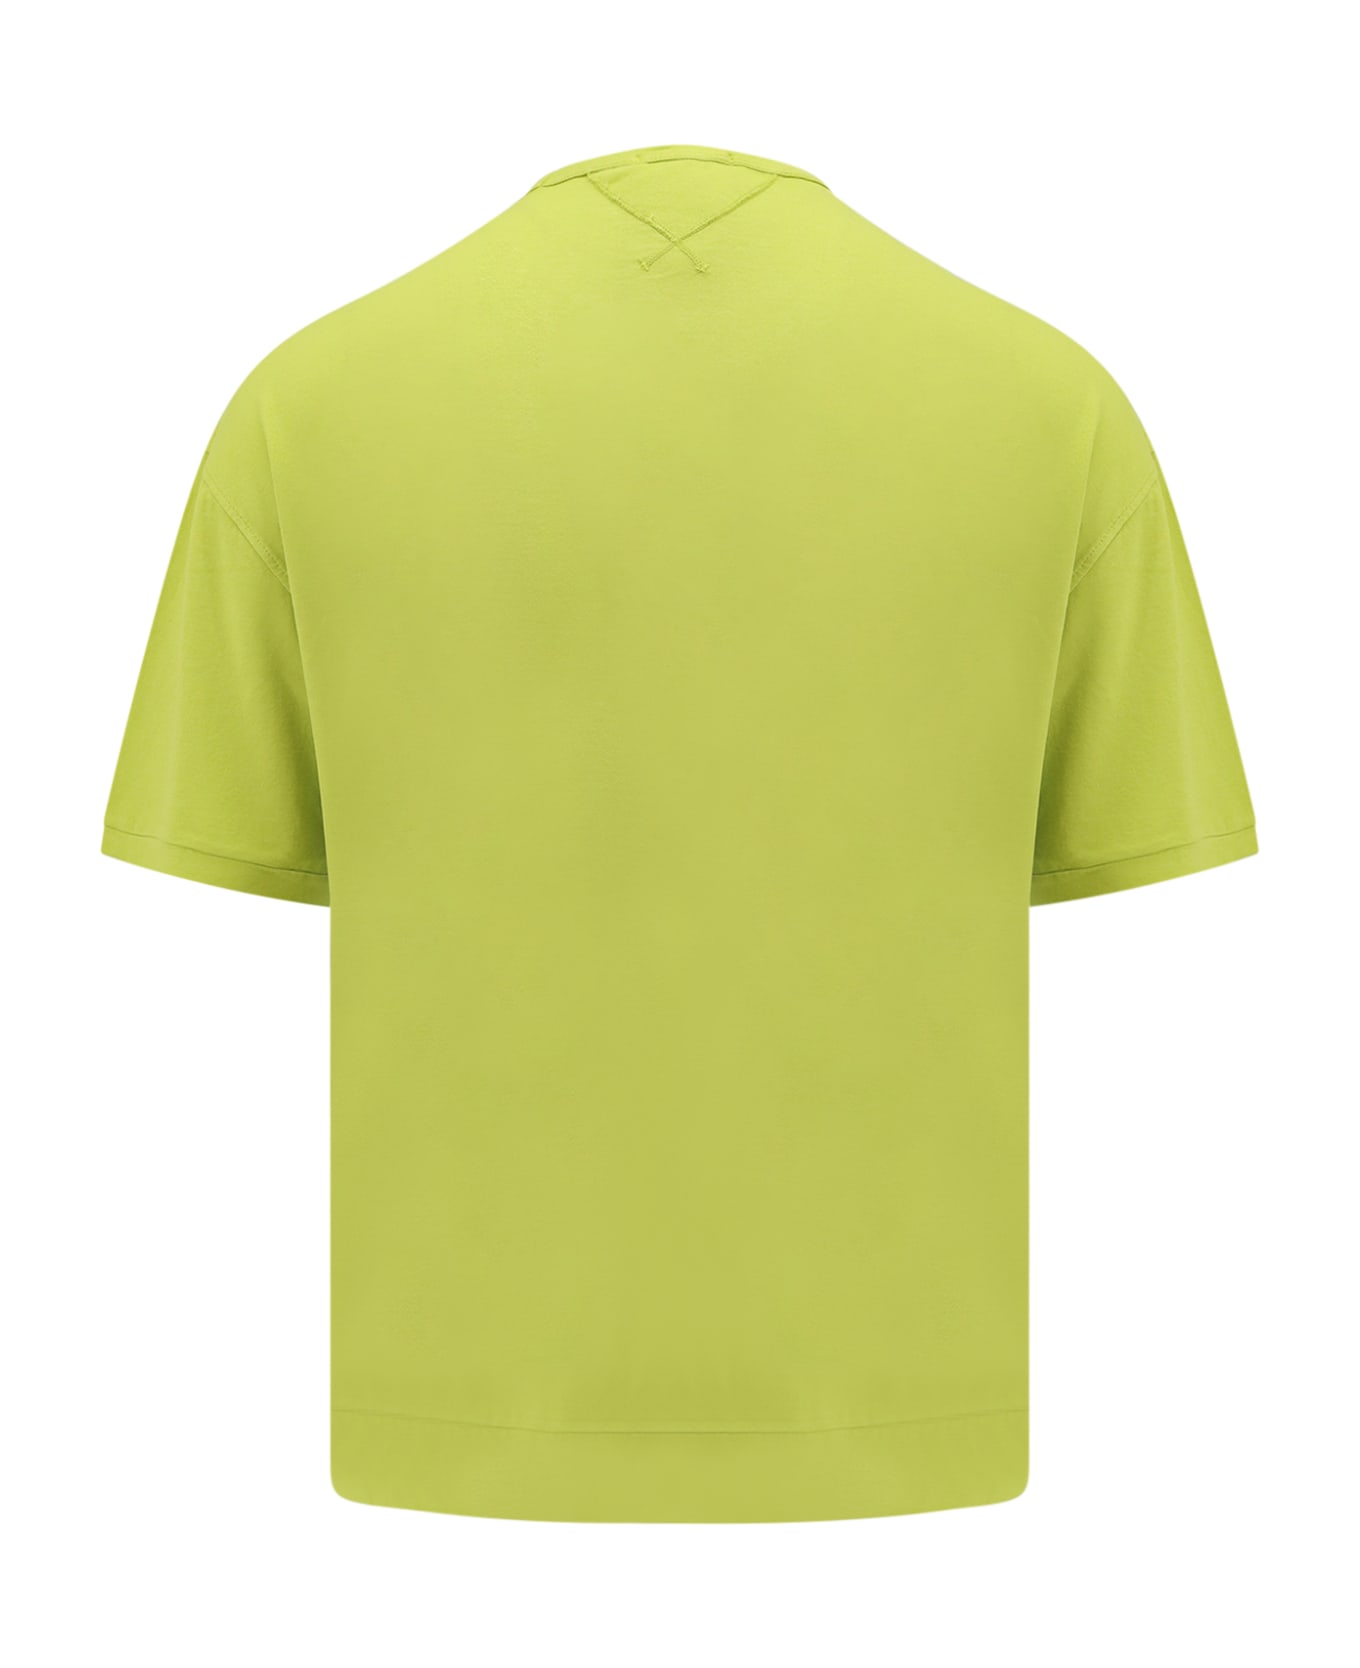 Ten C T-shirt - GREEN